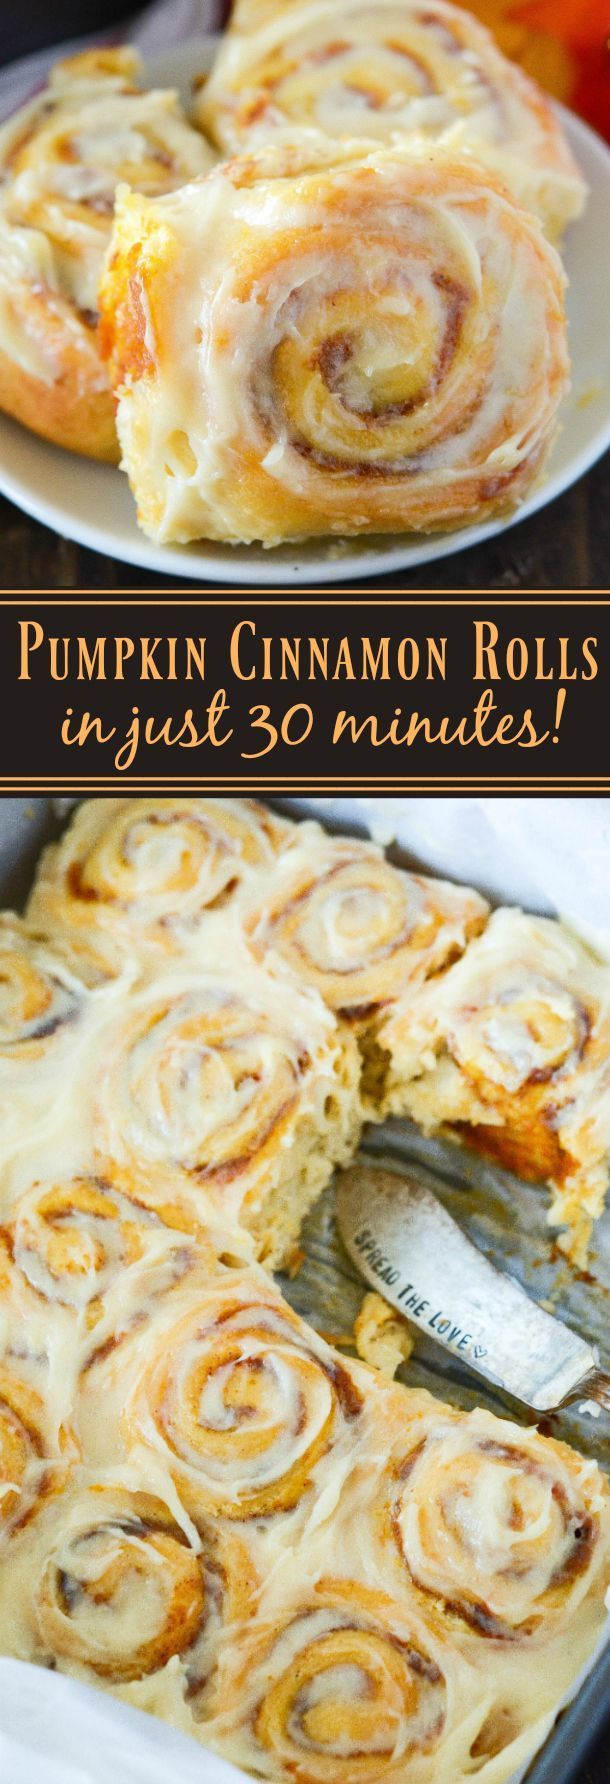 Pumpkin Cinnamon Rolls made in just 30 minutes! Sweet pumpkin cinnamon rolls are m